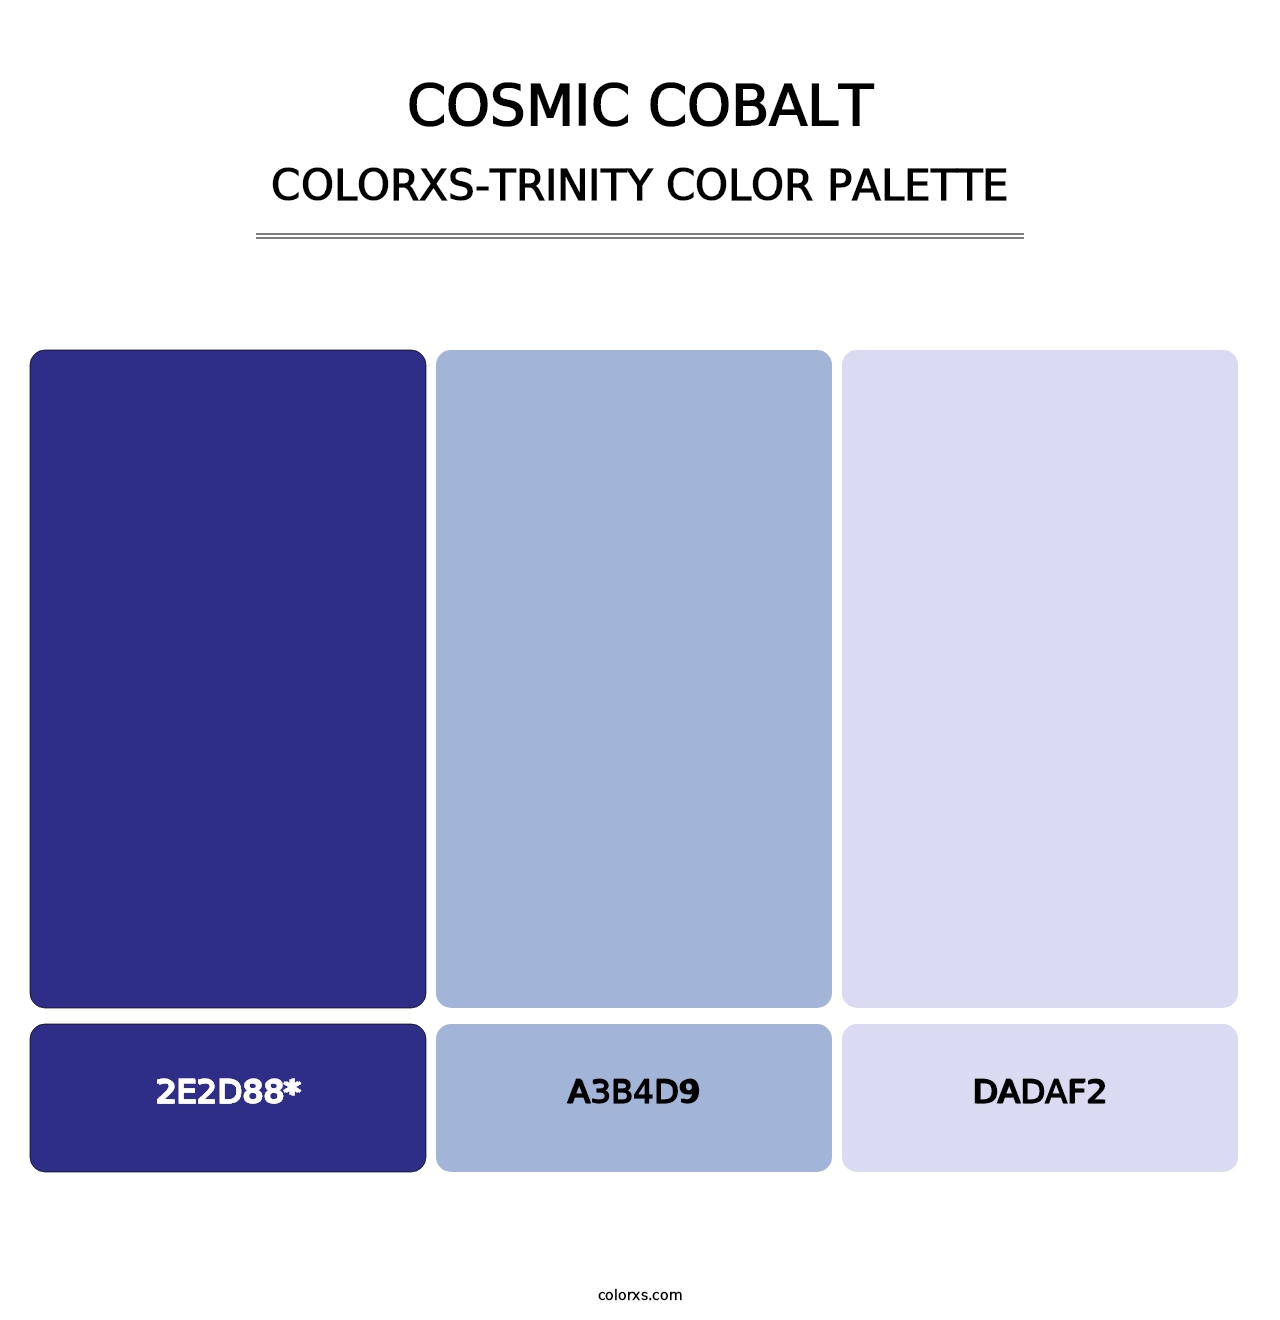 Cosmic Cobalt - Colorxs Trinity Palette